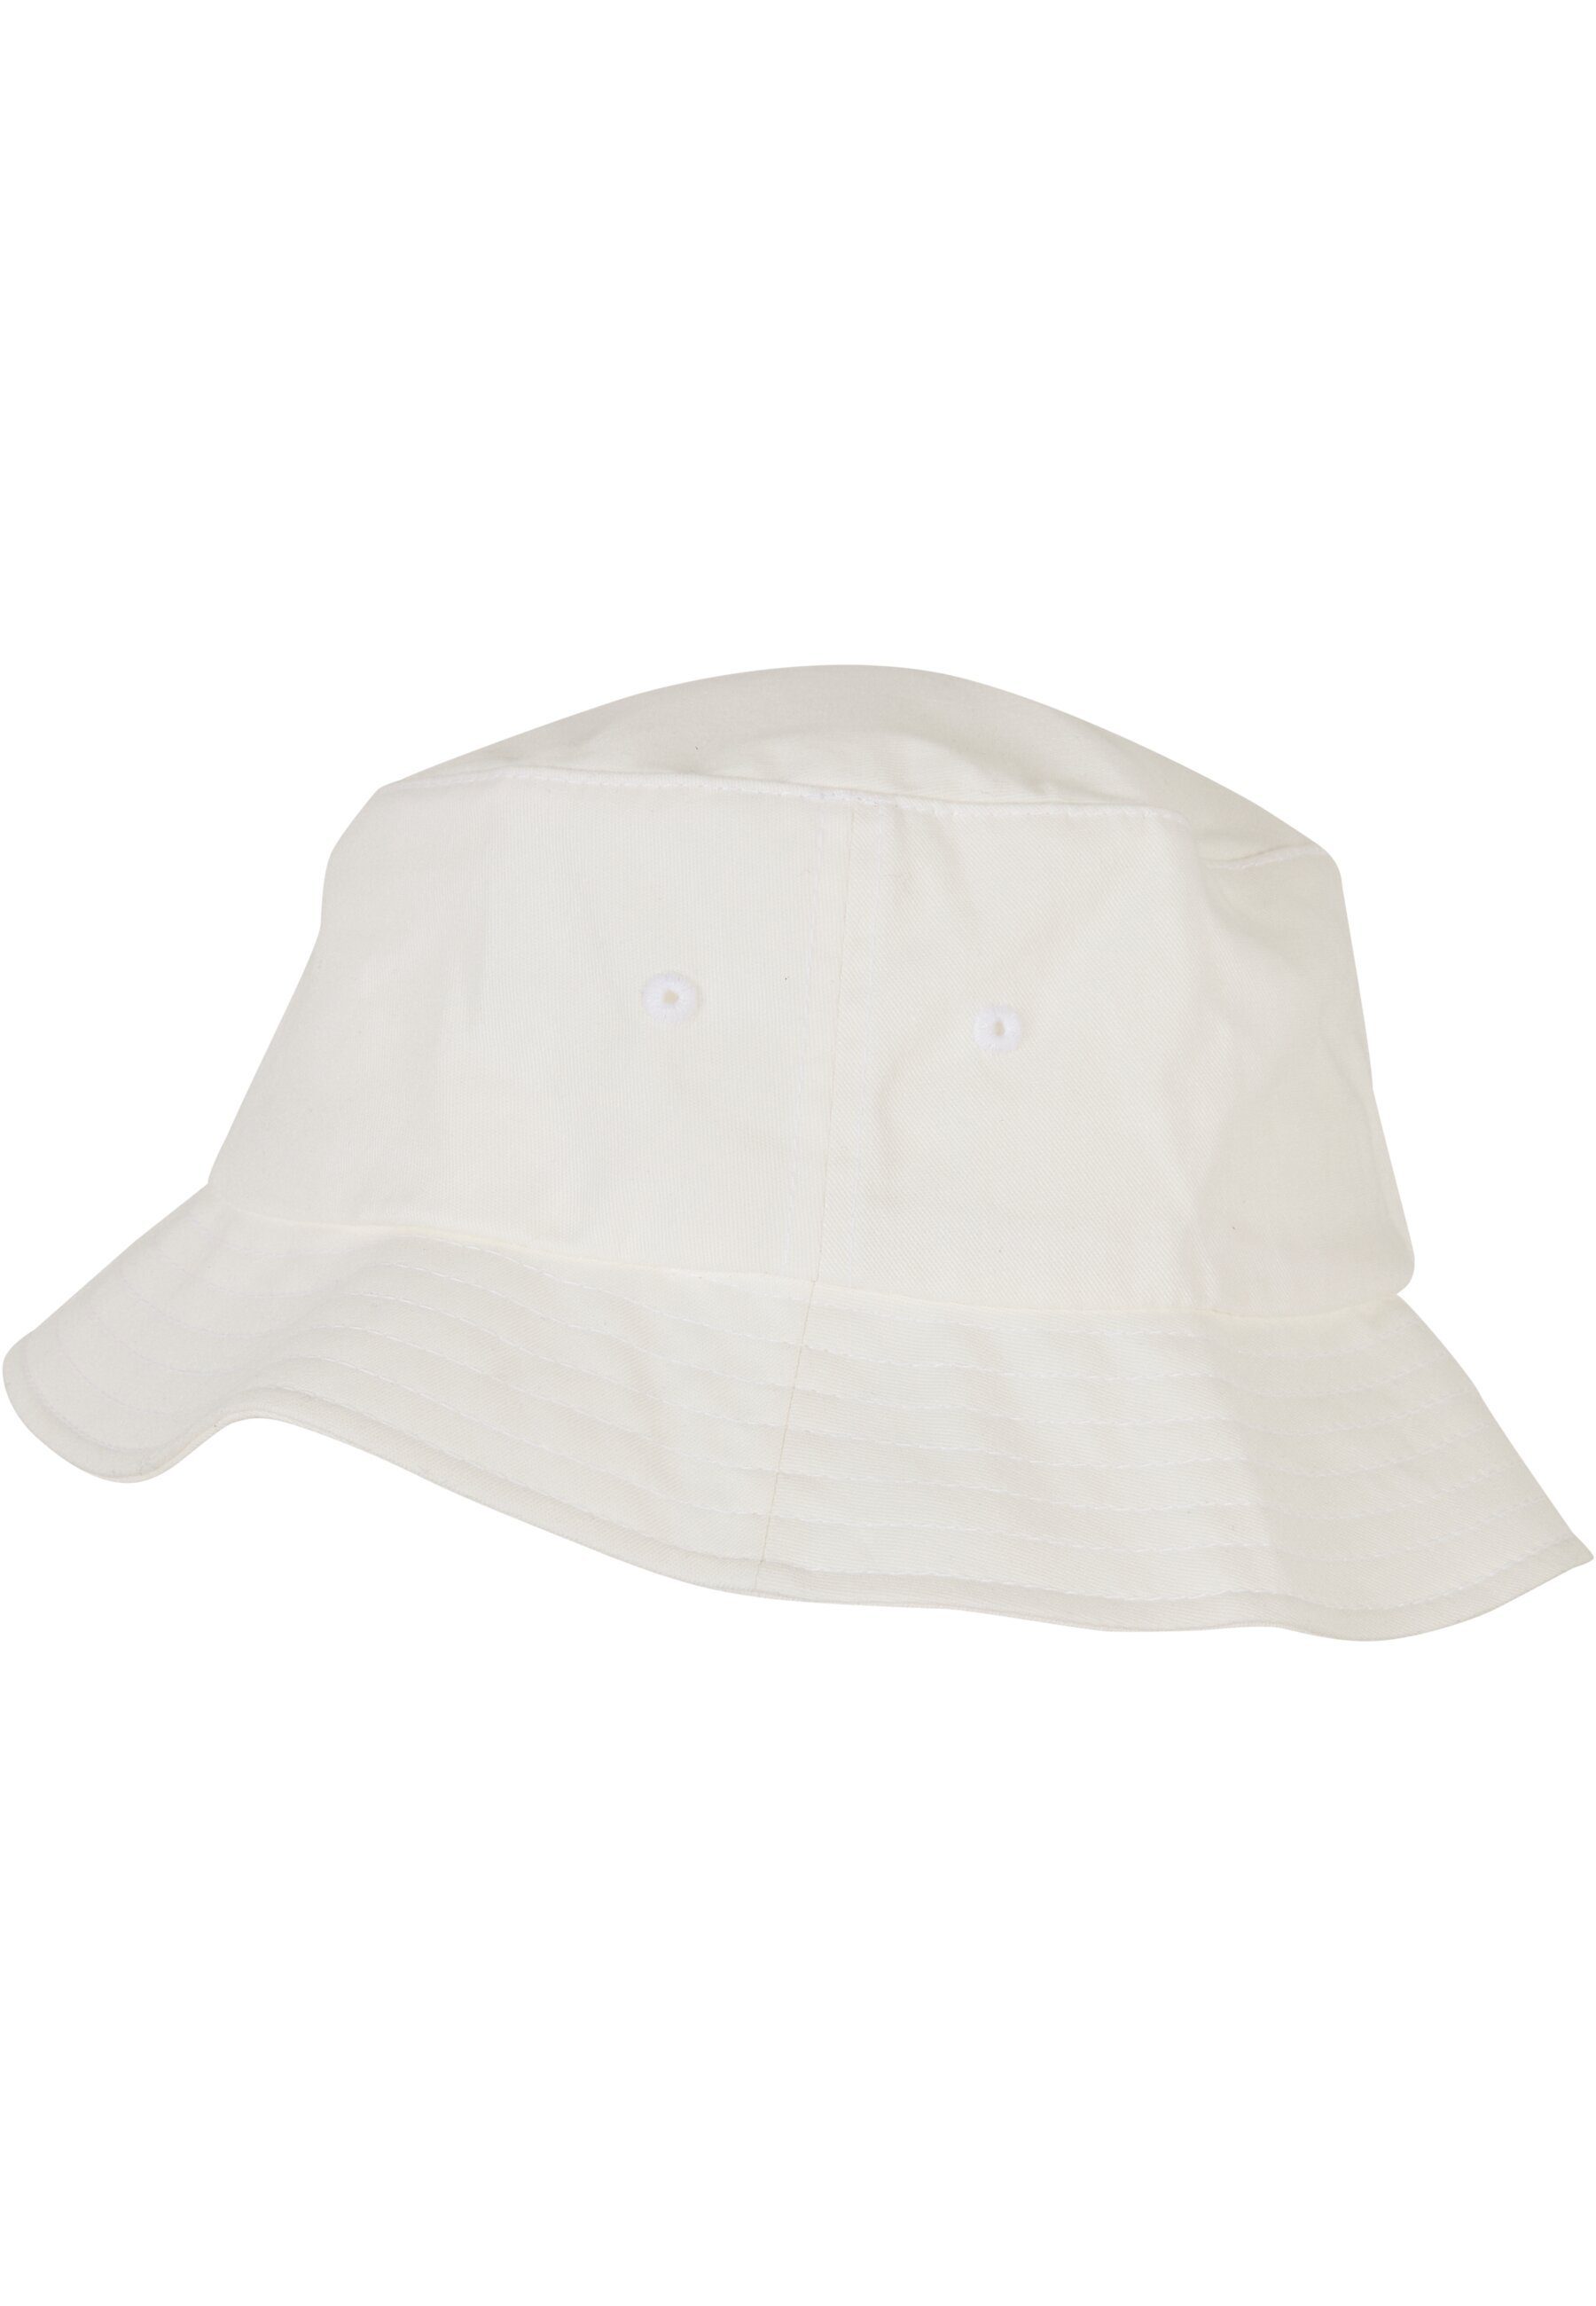 Flex Cap Hat Accessoires MisterTee Bucket Medusa